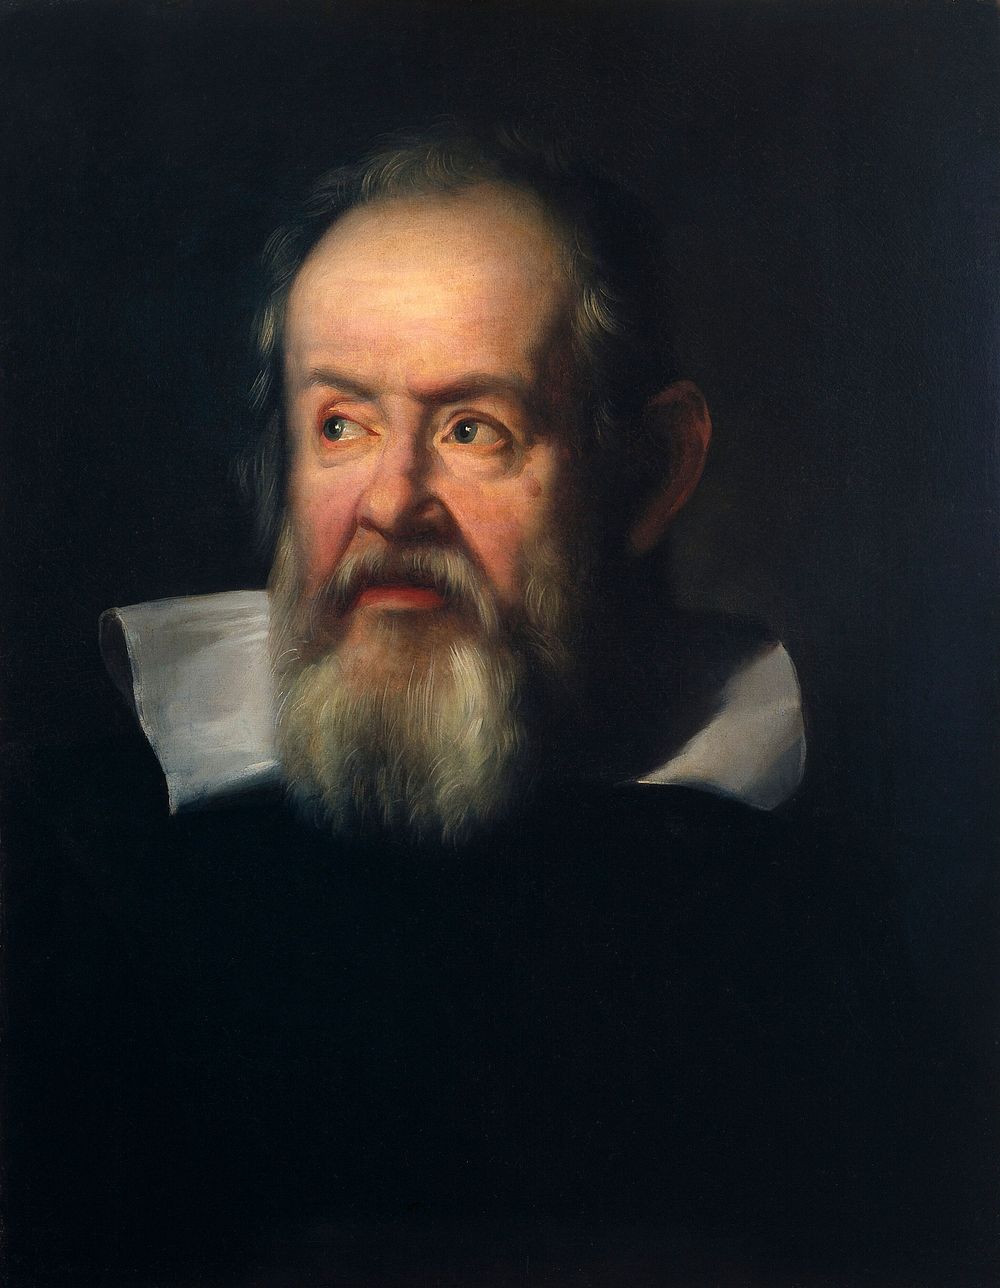 Galileo Galilei (1564-1642). Oil painting after Justus Sustermans.